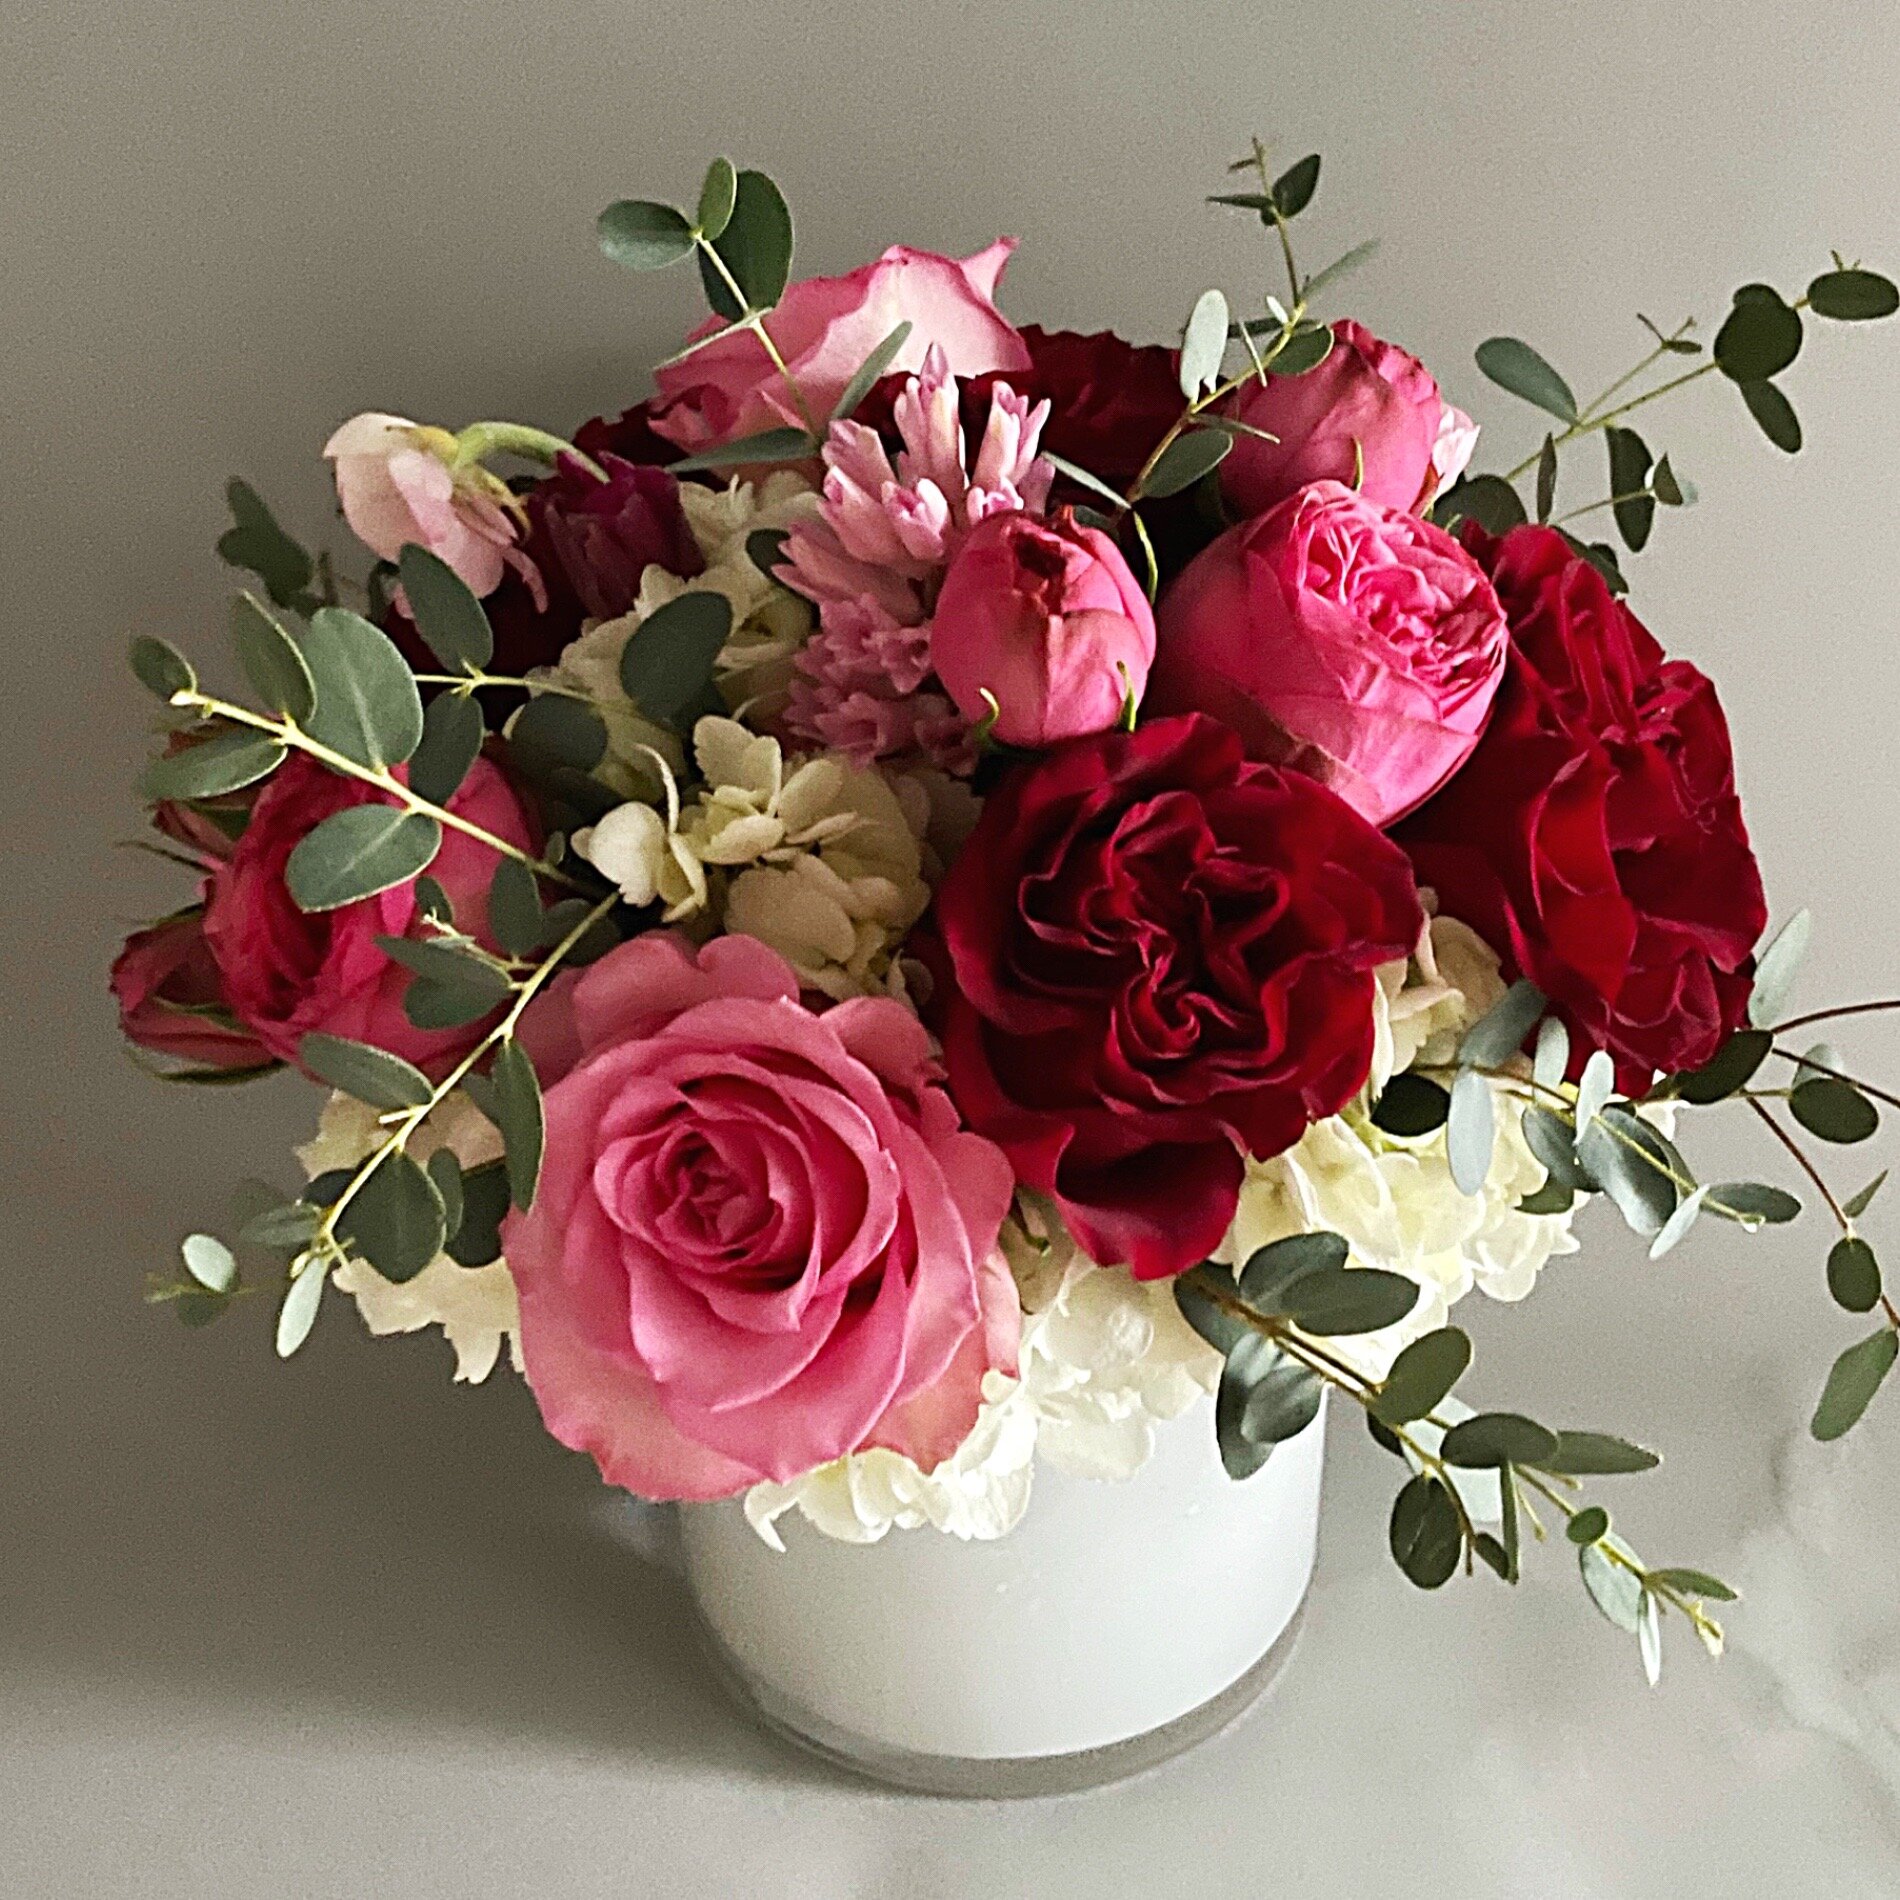 Striking Bouquet - Atelier Ashley